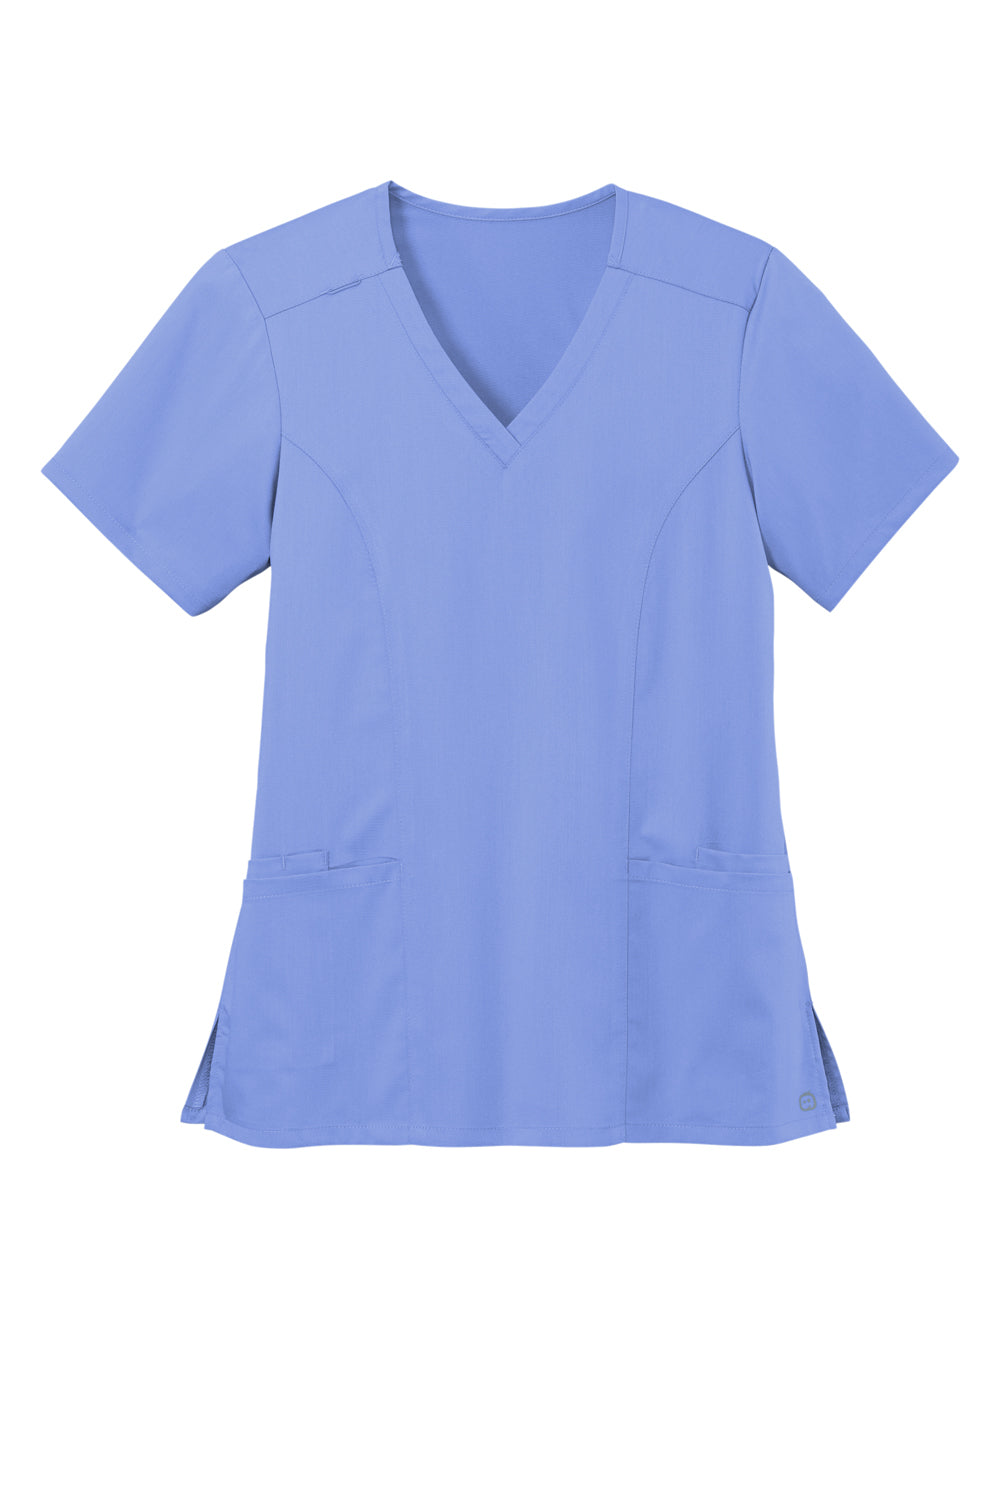 Wonderwink WW4168 Premiere Flex Short Sleeve V-Neck Shirt w/ Pockets Ceil Blue Flat Front